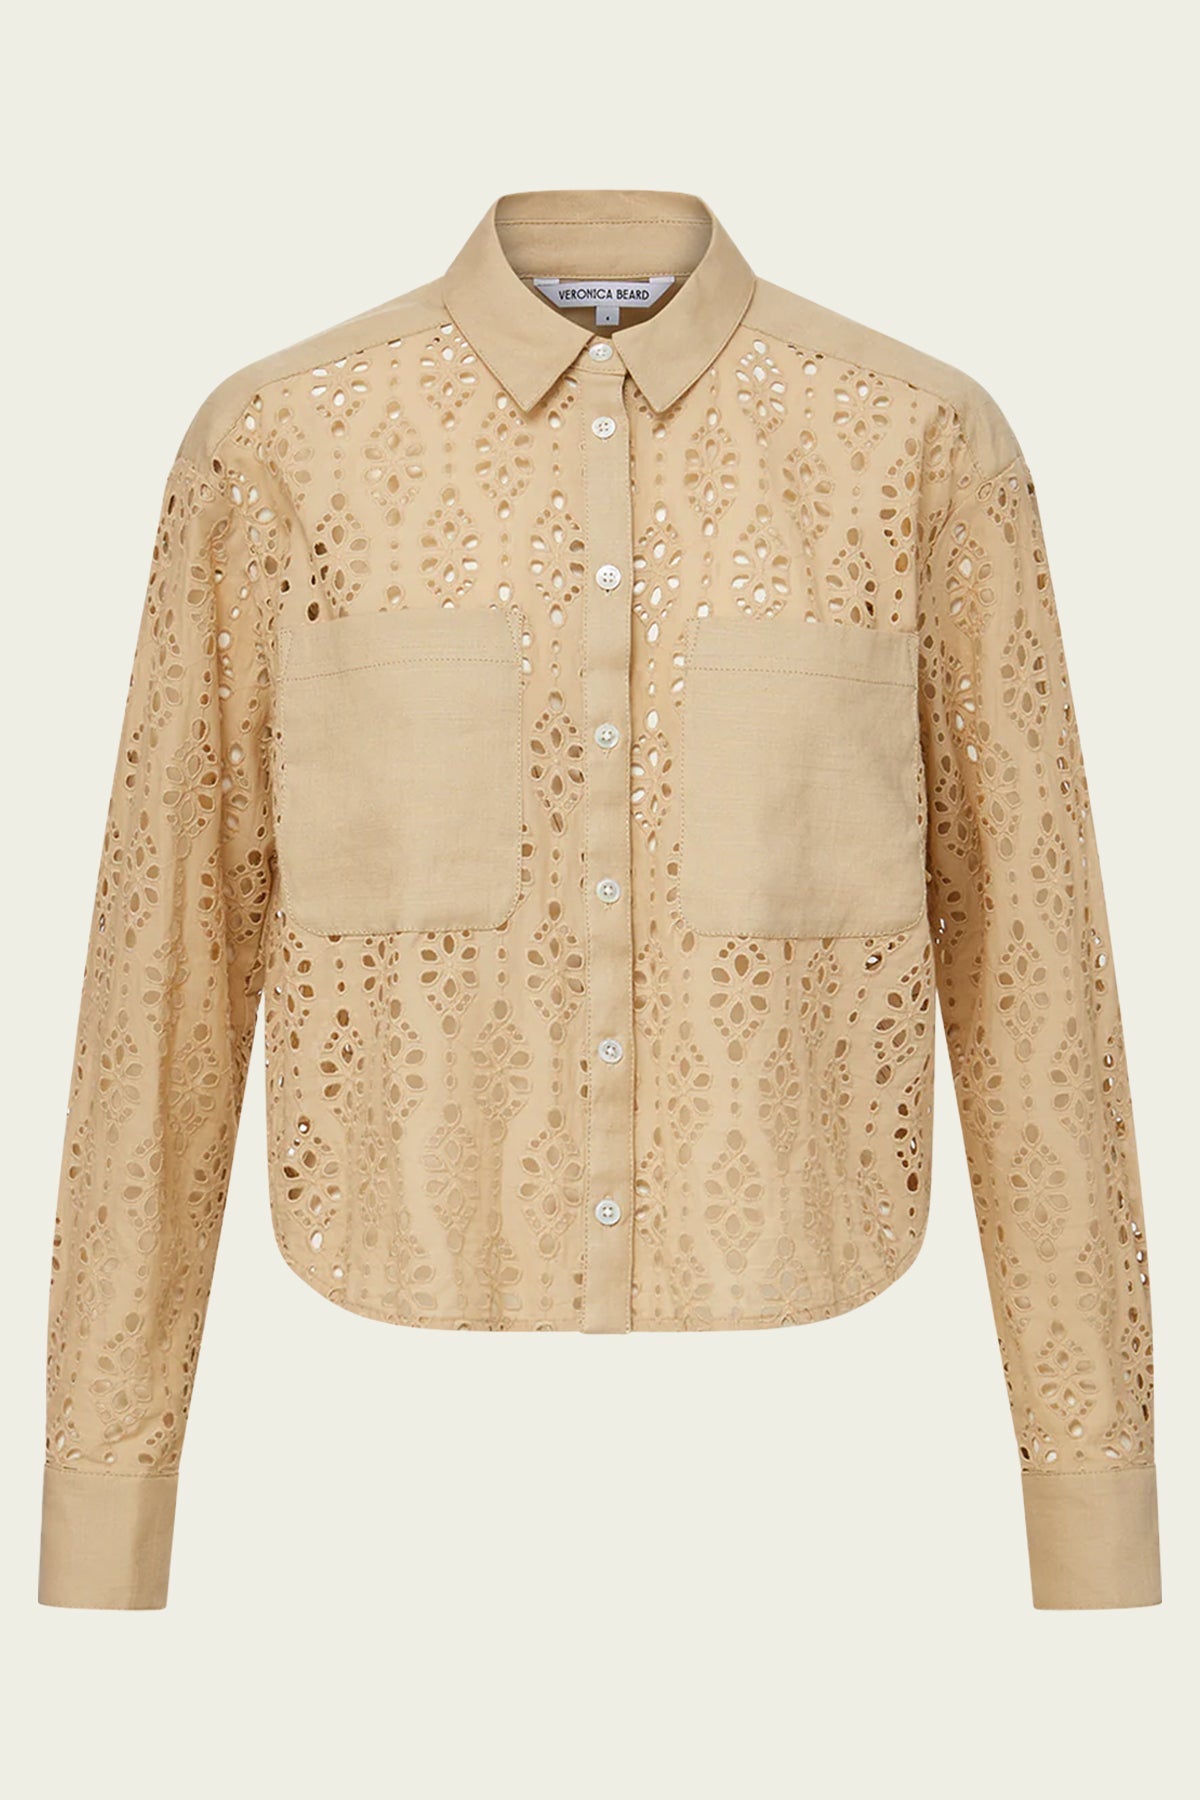 Aderes Cotton - Eyelet Shirt in Stone Khaki - shop - olivia.com